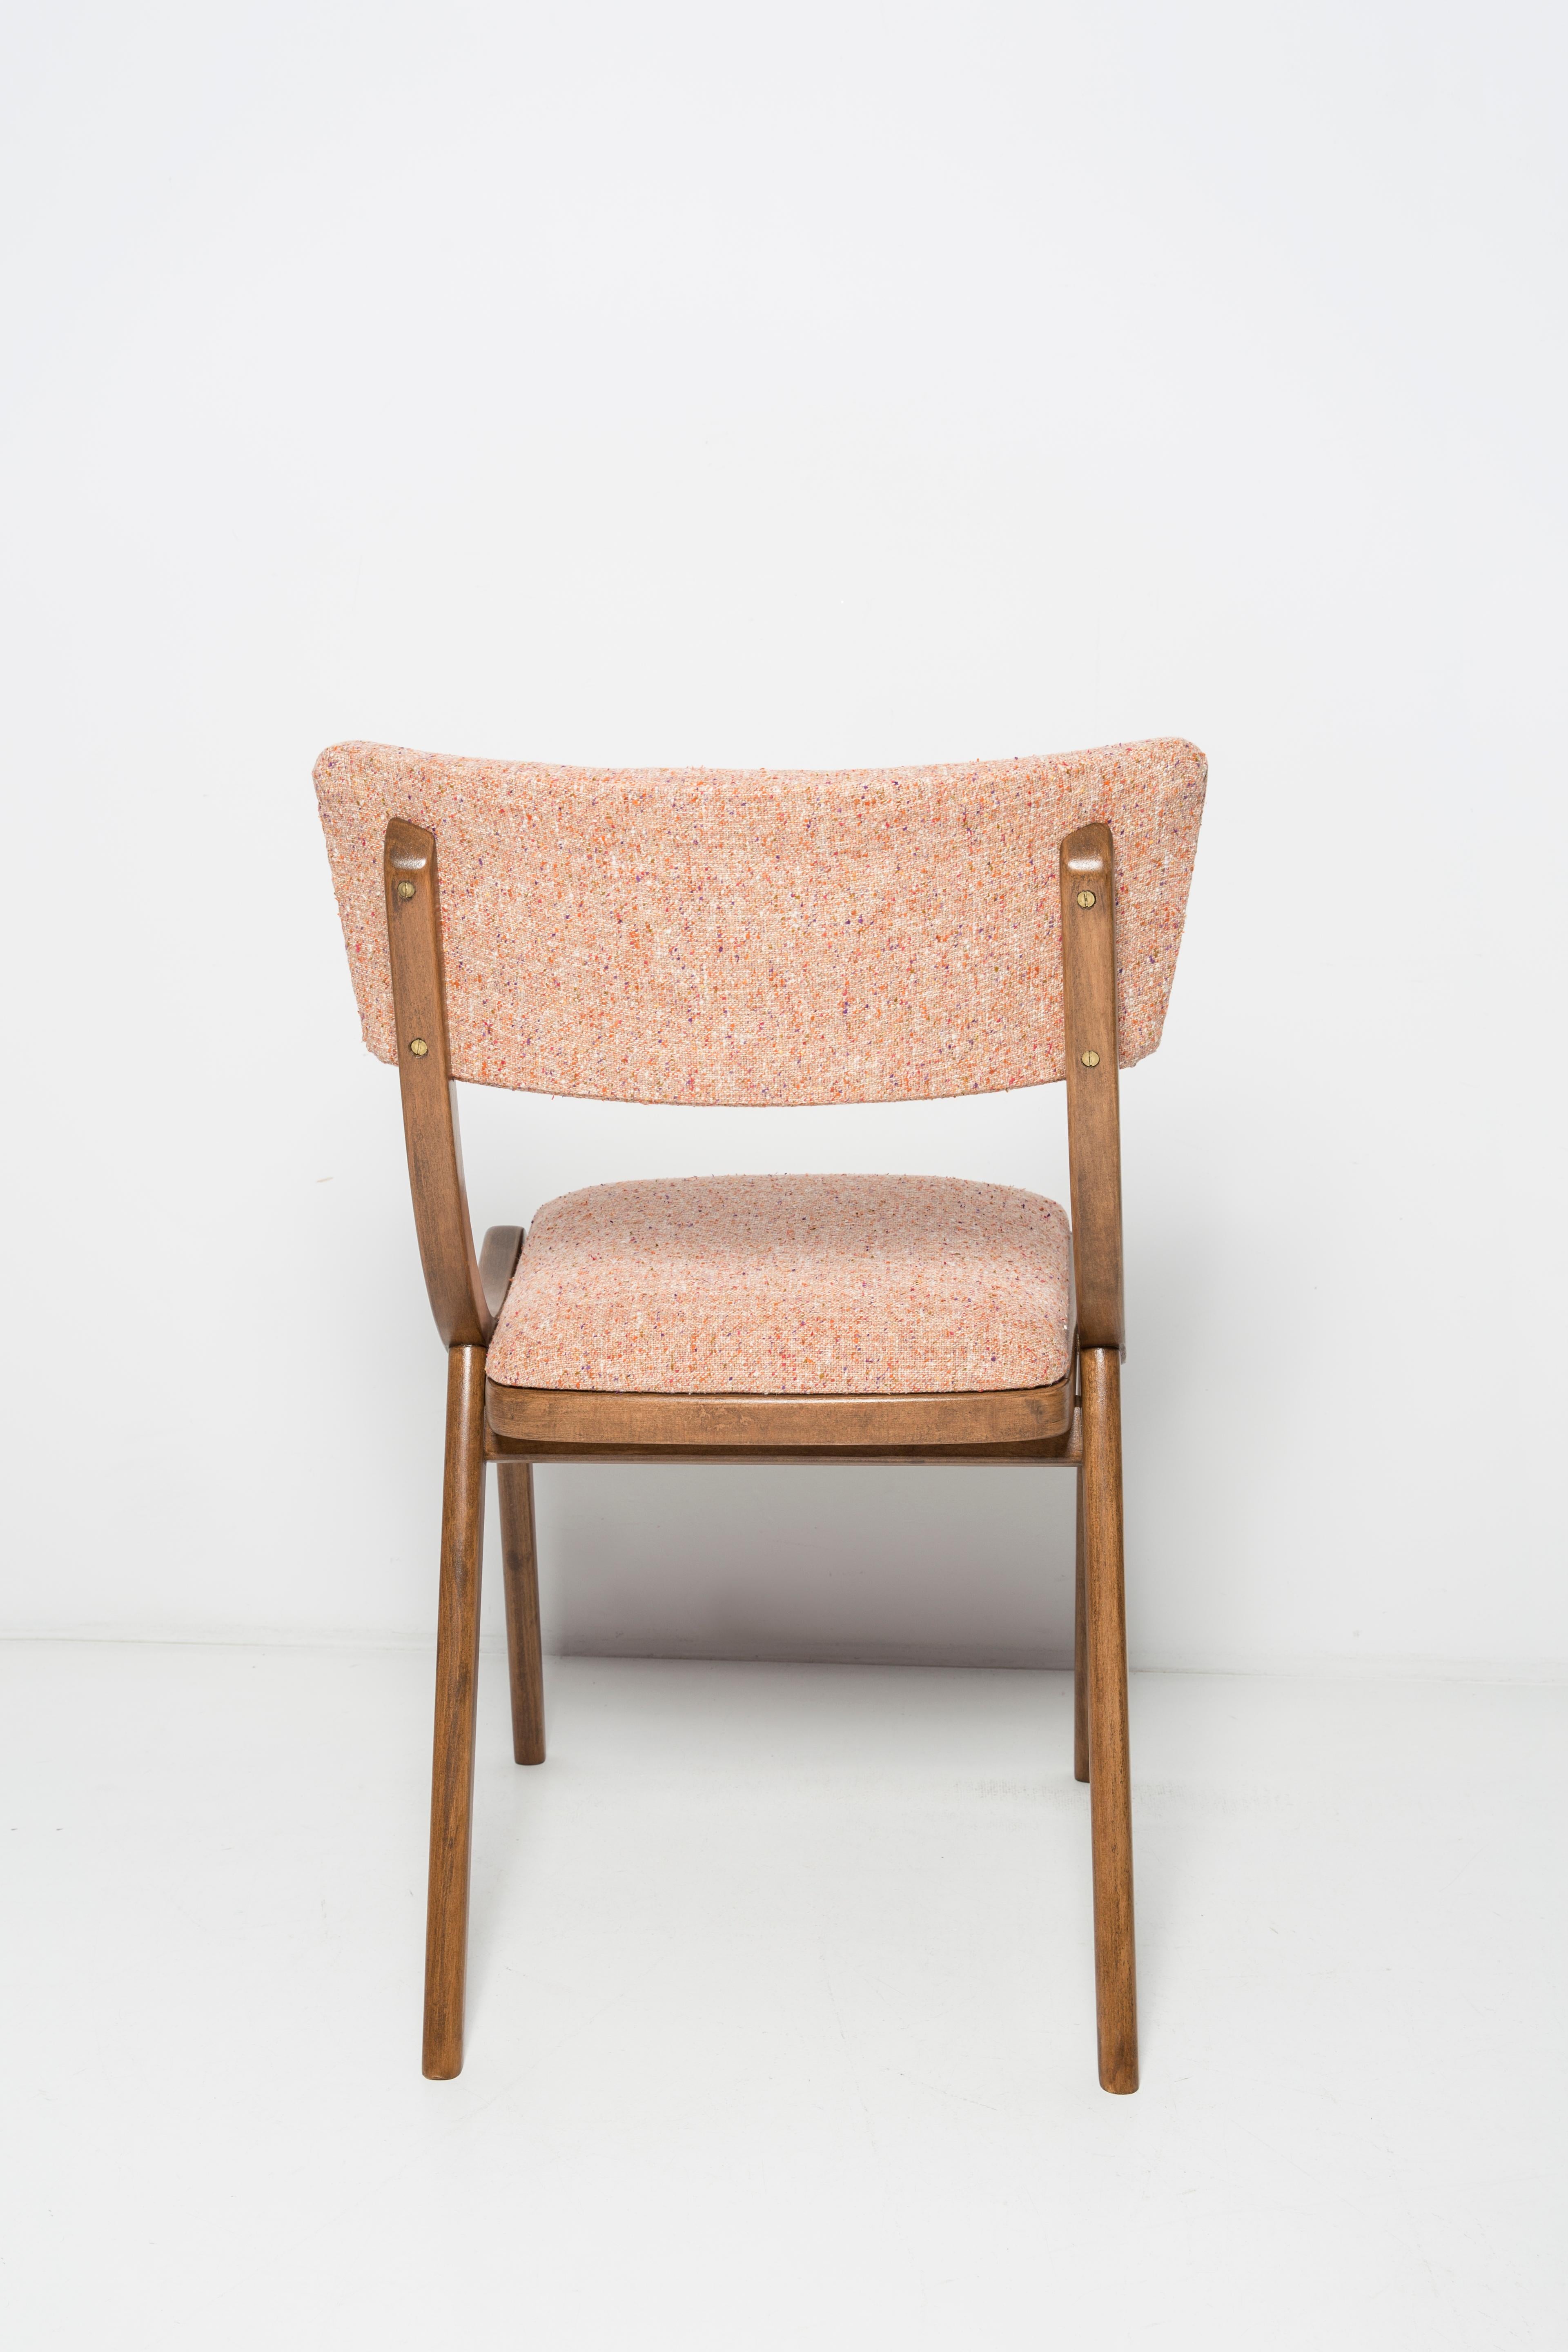 Hand-Crafted Mid Century Modern Bumerang Chair, Peach Orange Wool, Poland, 1960s For Sale